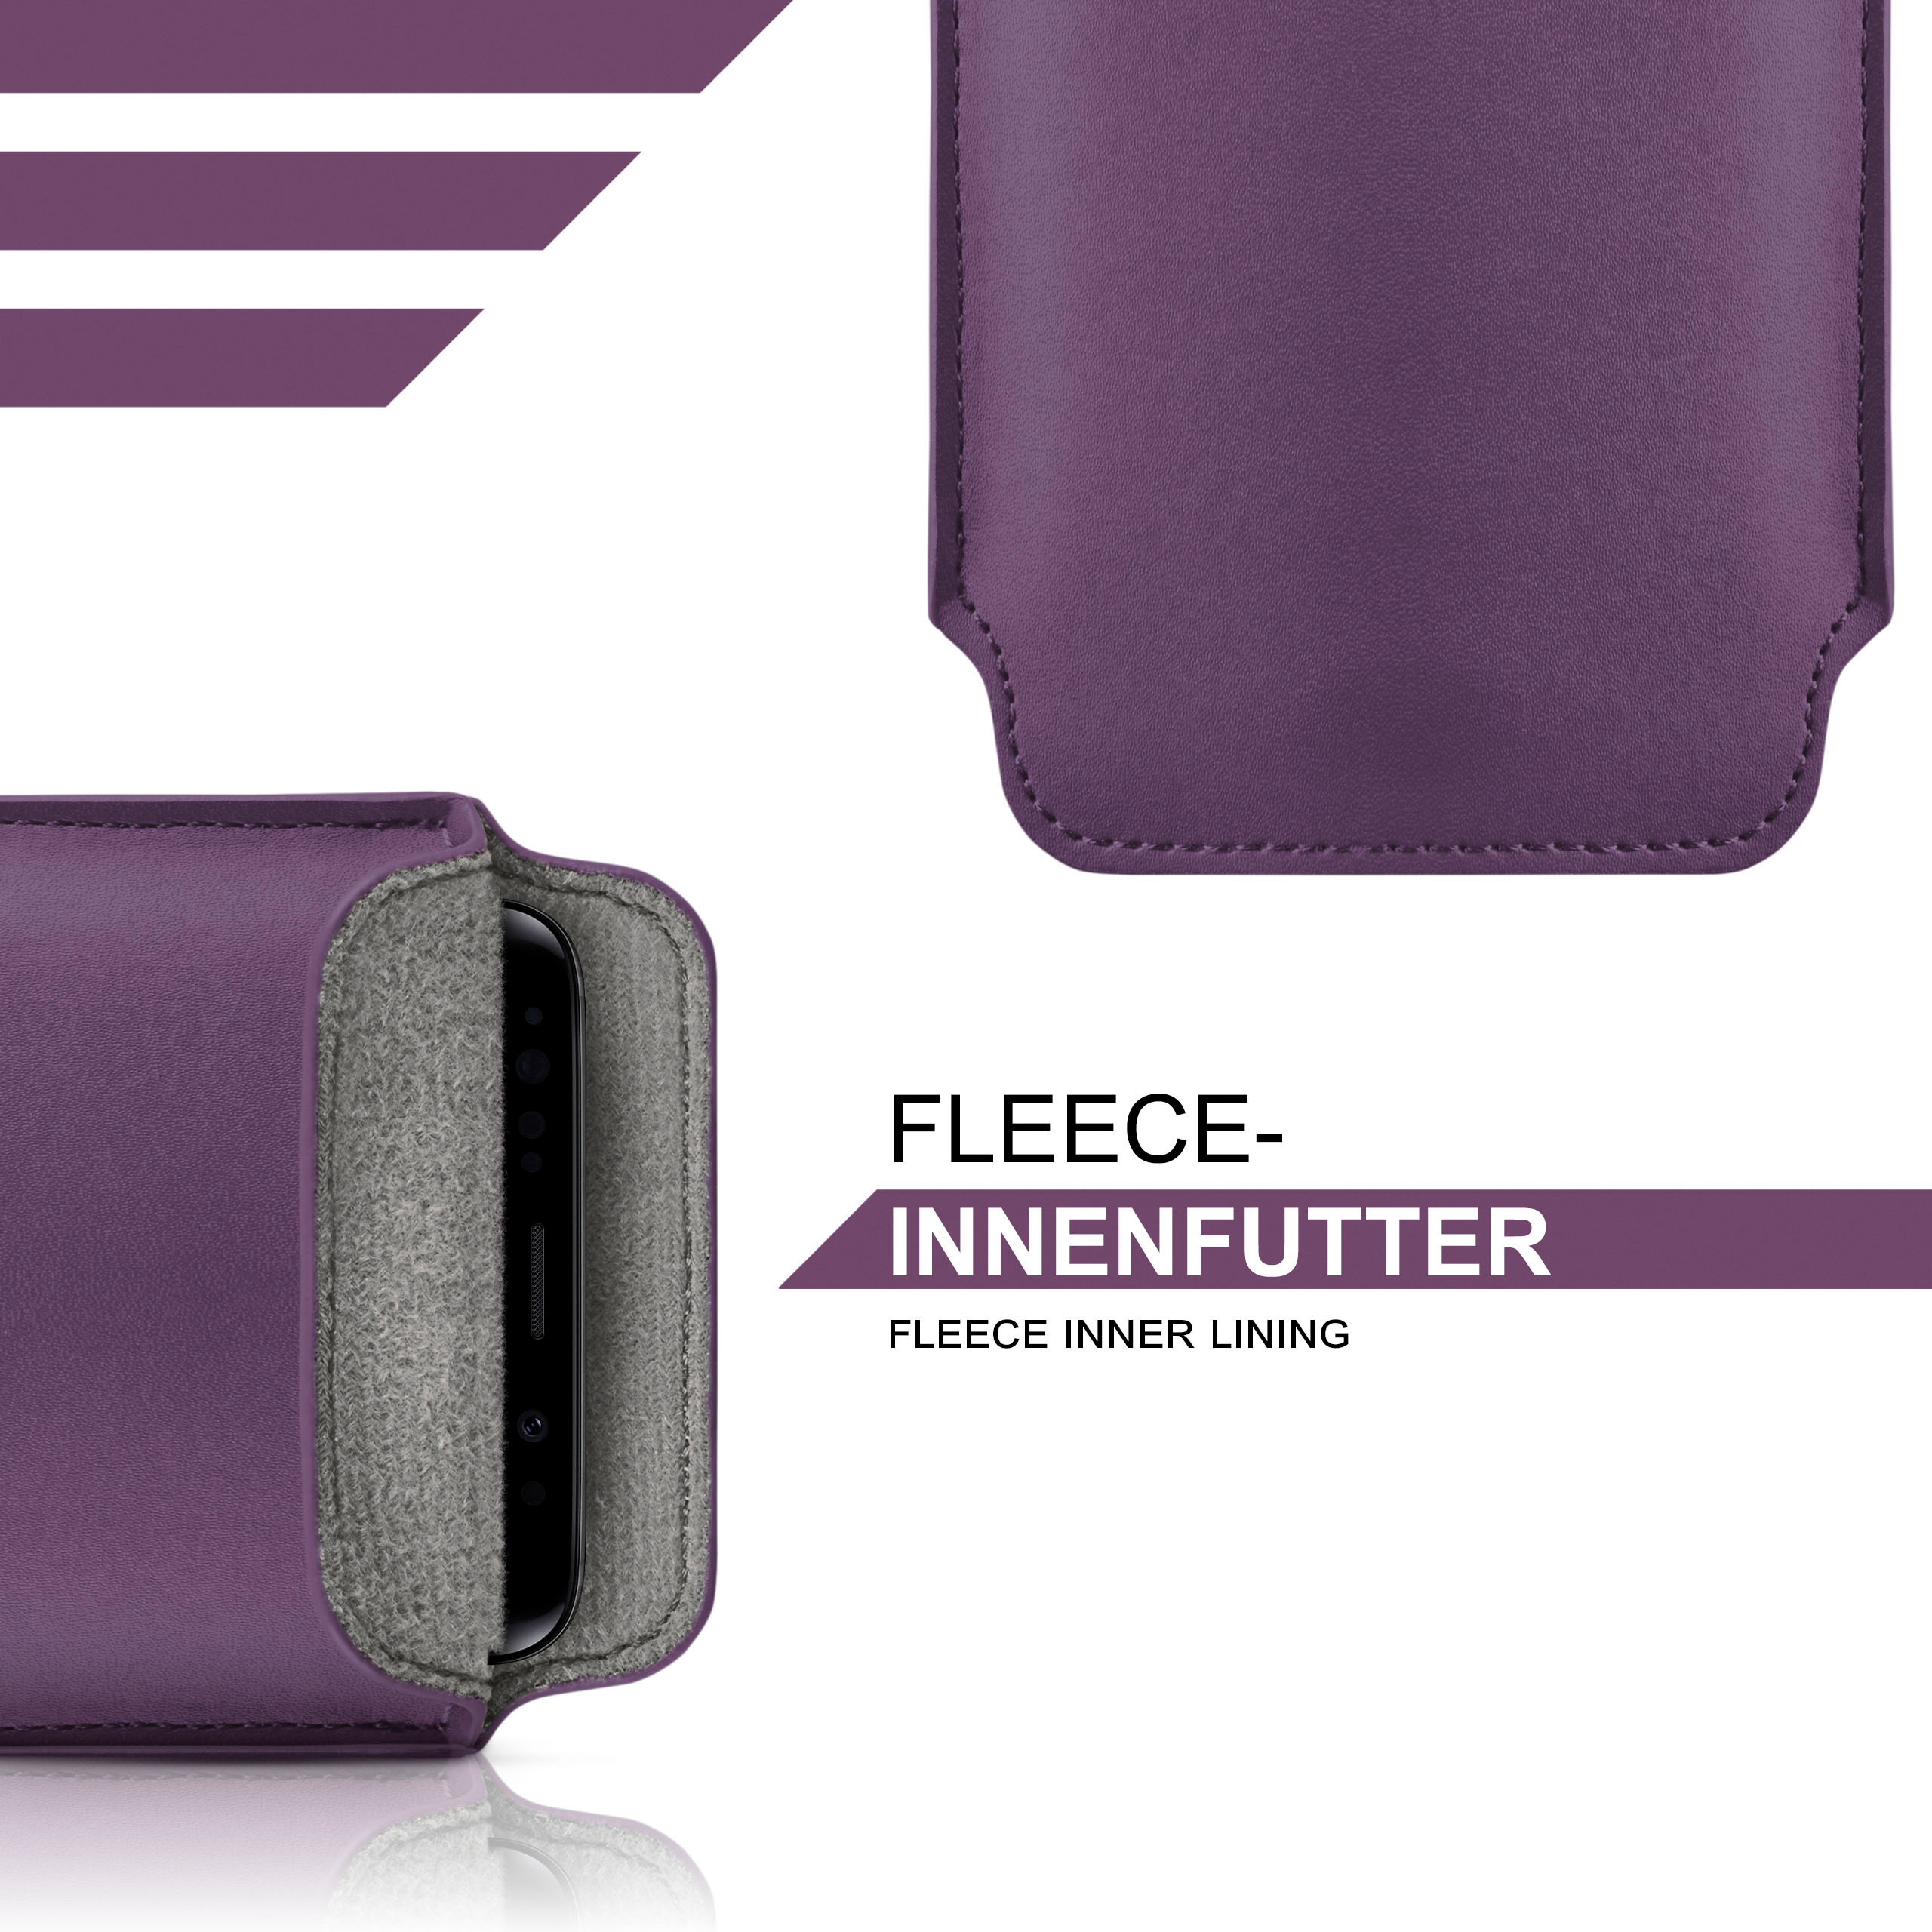 MOEX Slide Case, 6, Indigo-Violet Cover, Full OnePlus